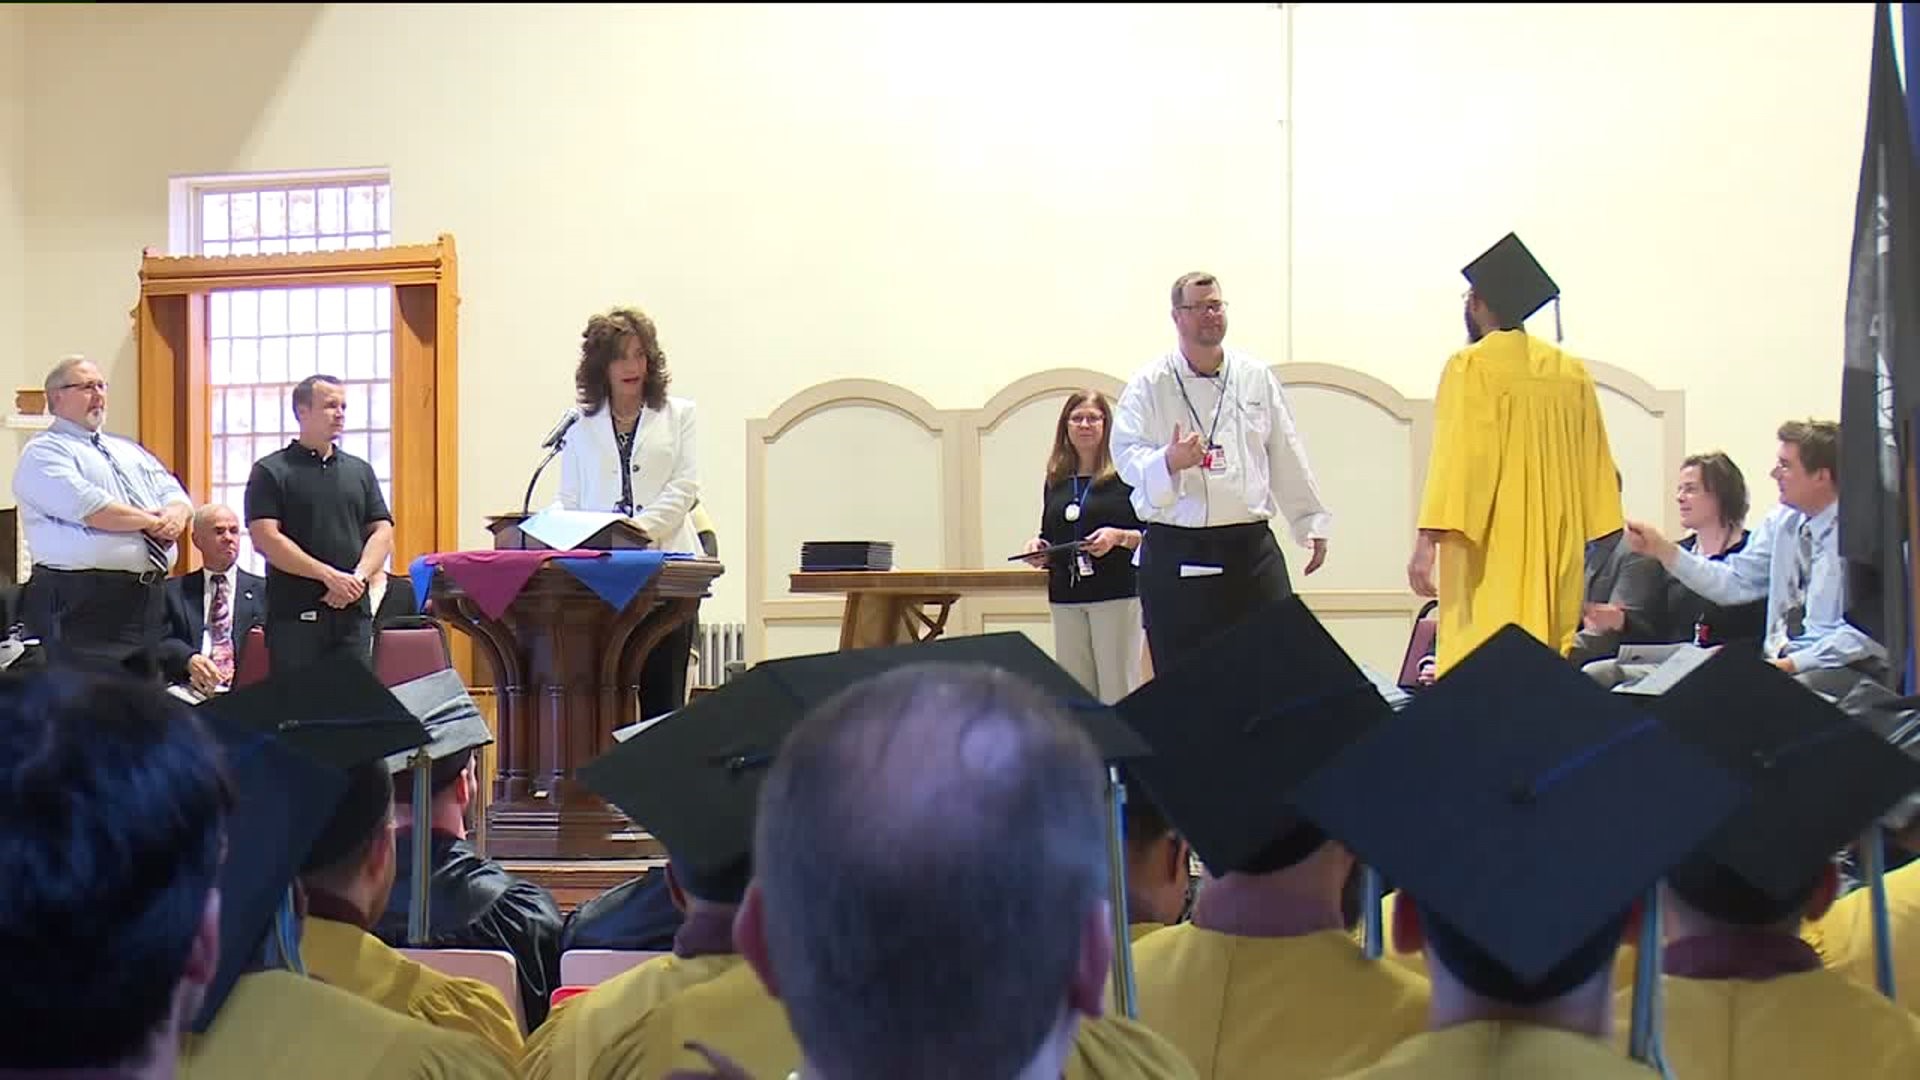 Graduation Ceremony for Inmates at SCI Waymart